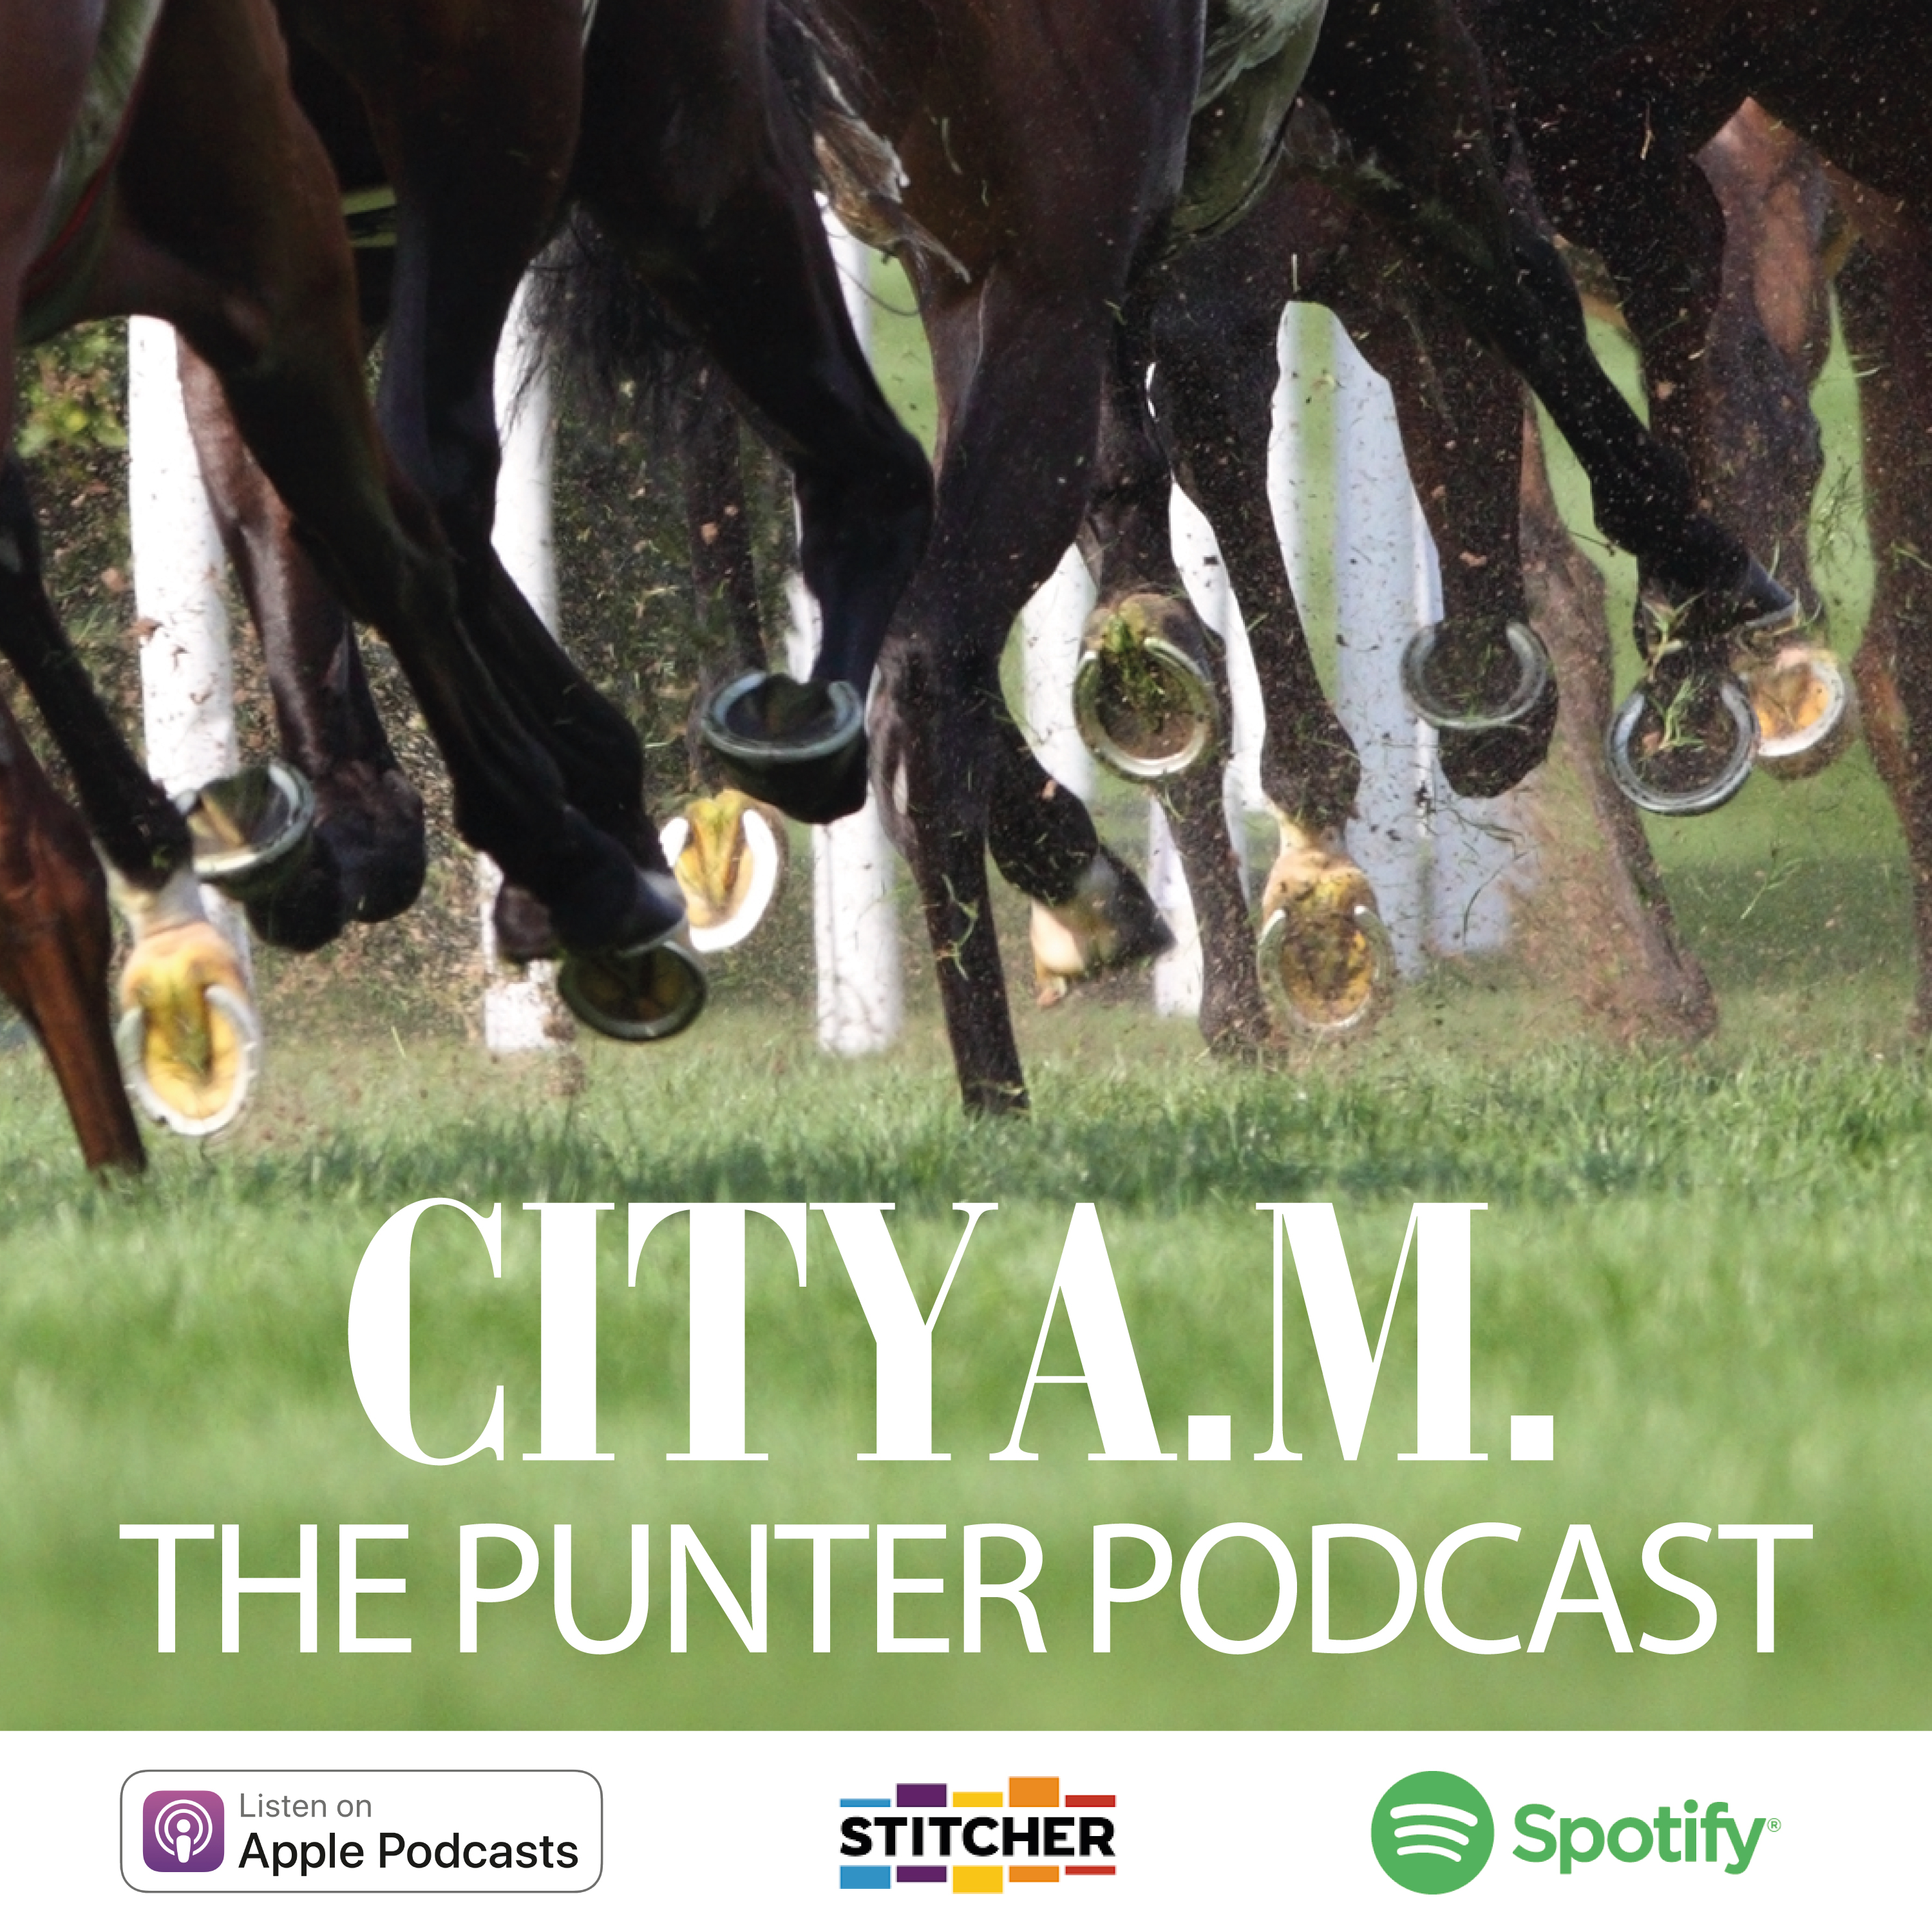 January 21st - Punter Podcast Summary